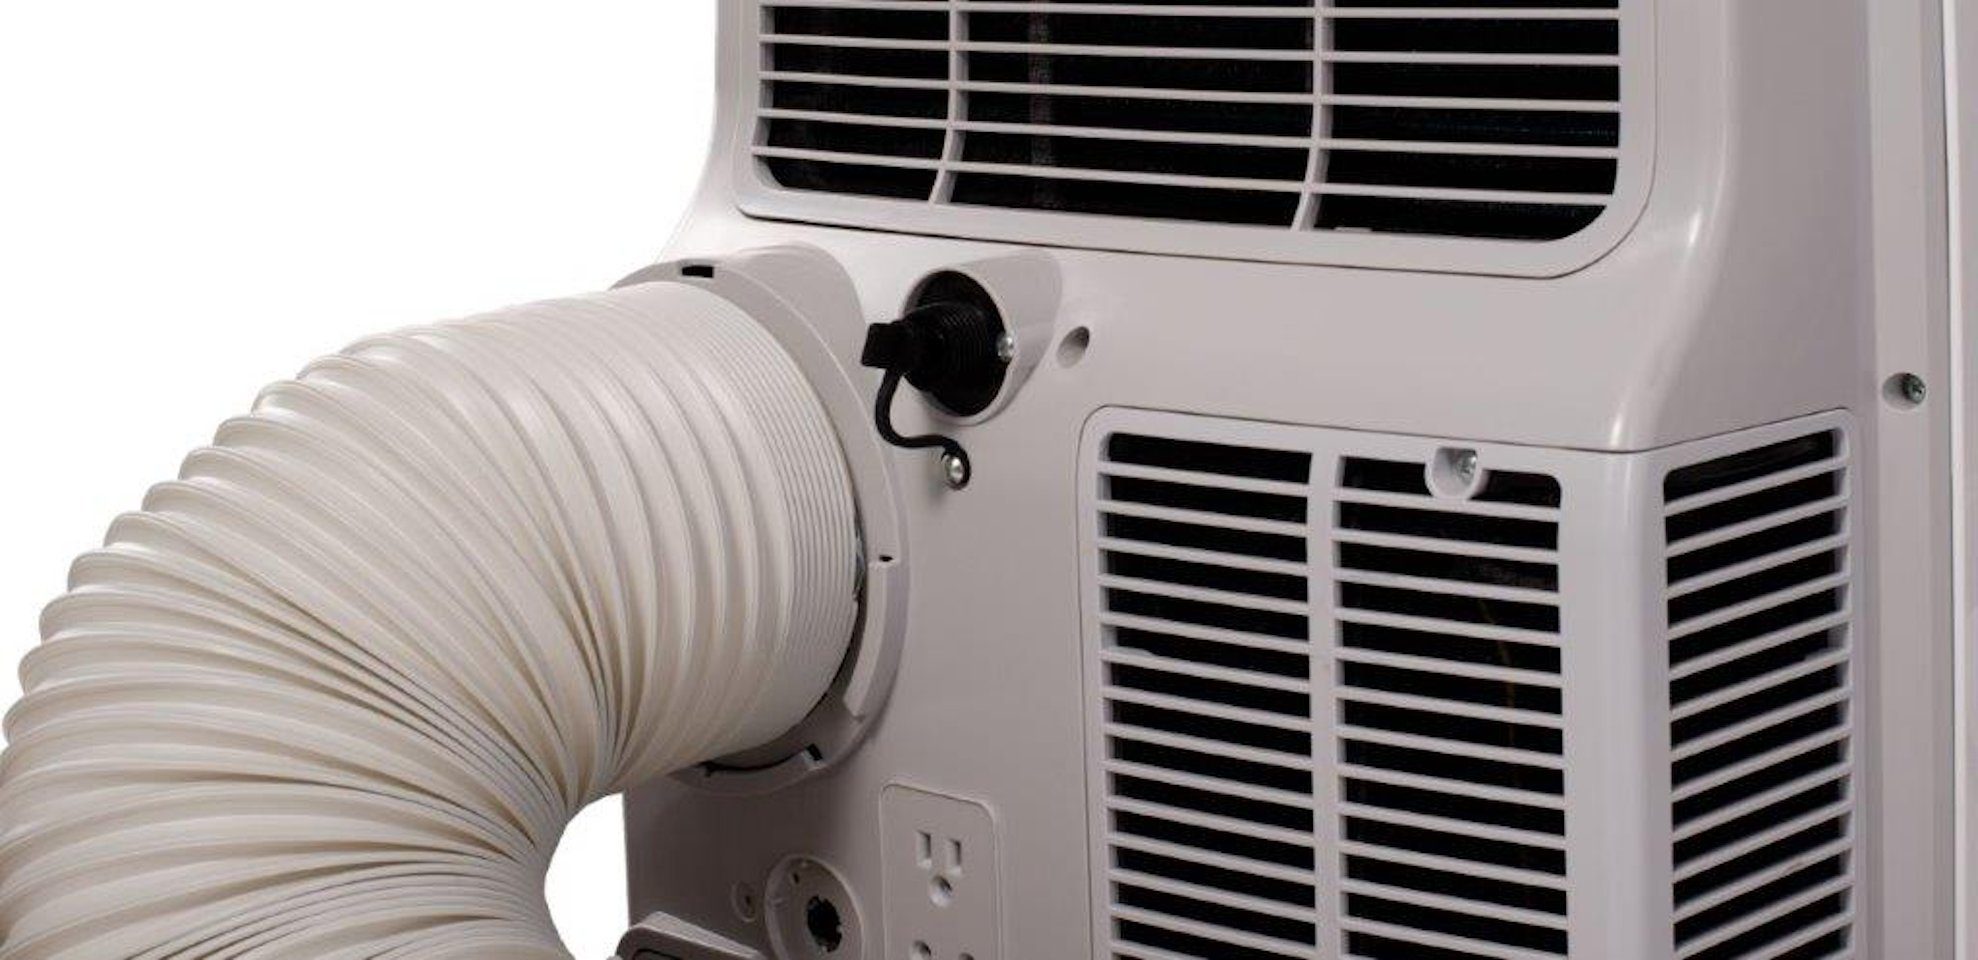 3-in-1-Klimagerät Pro Klimaanlage comfee ECO mobile Friendly